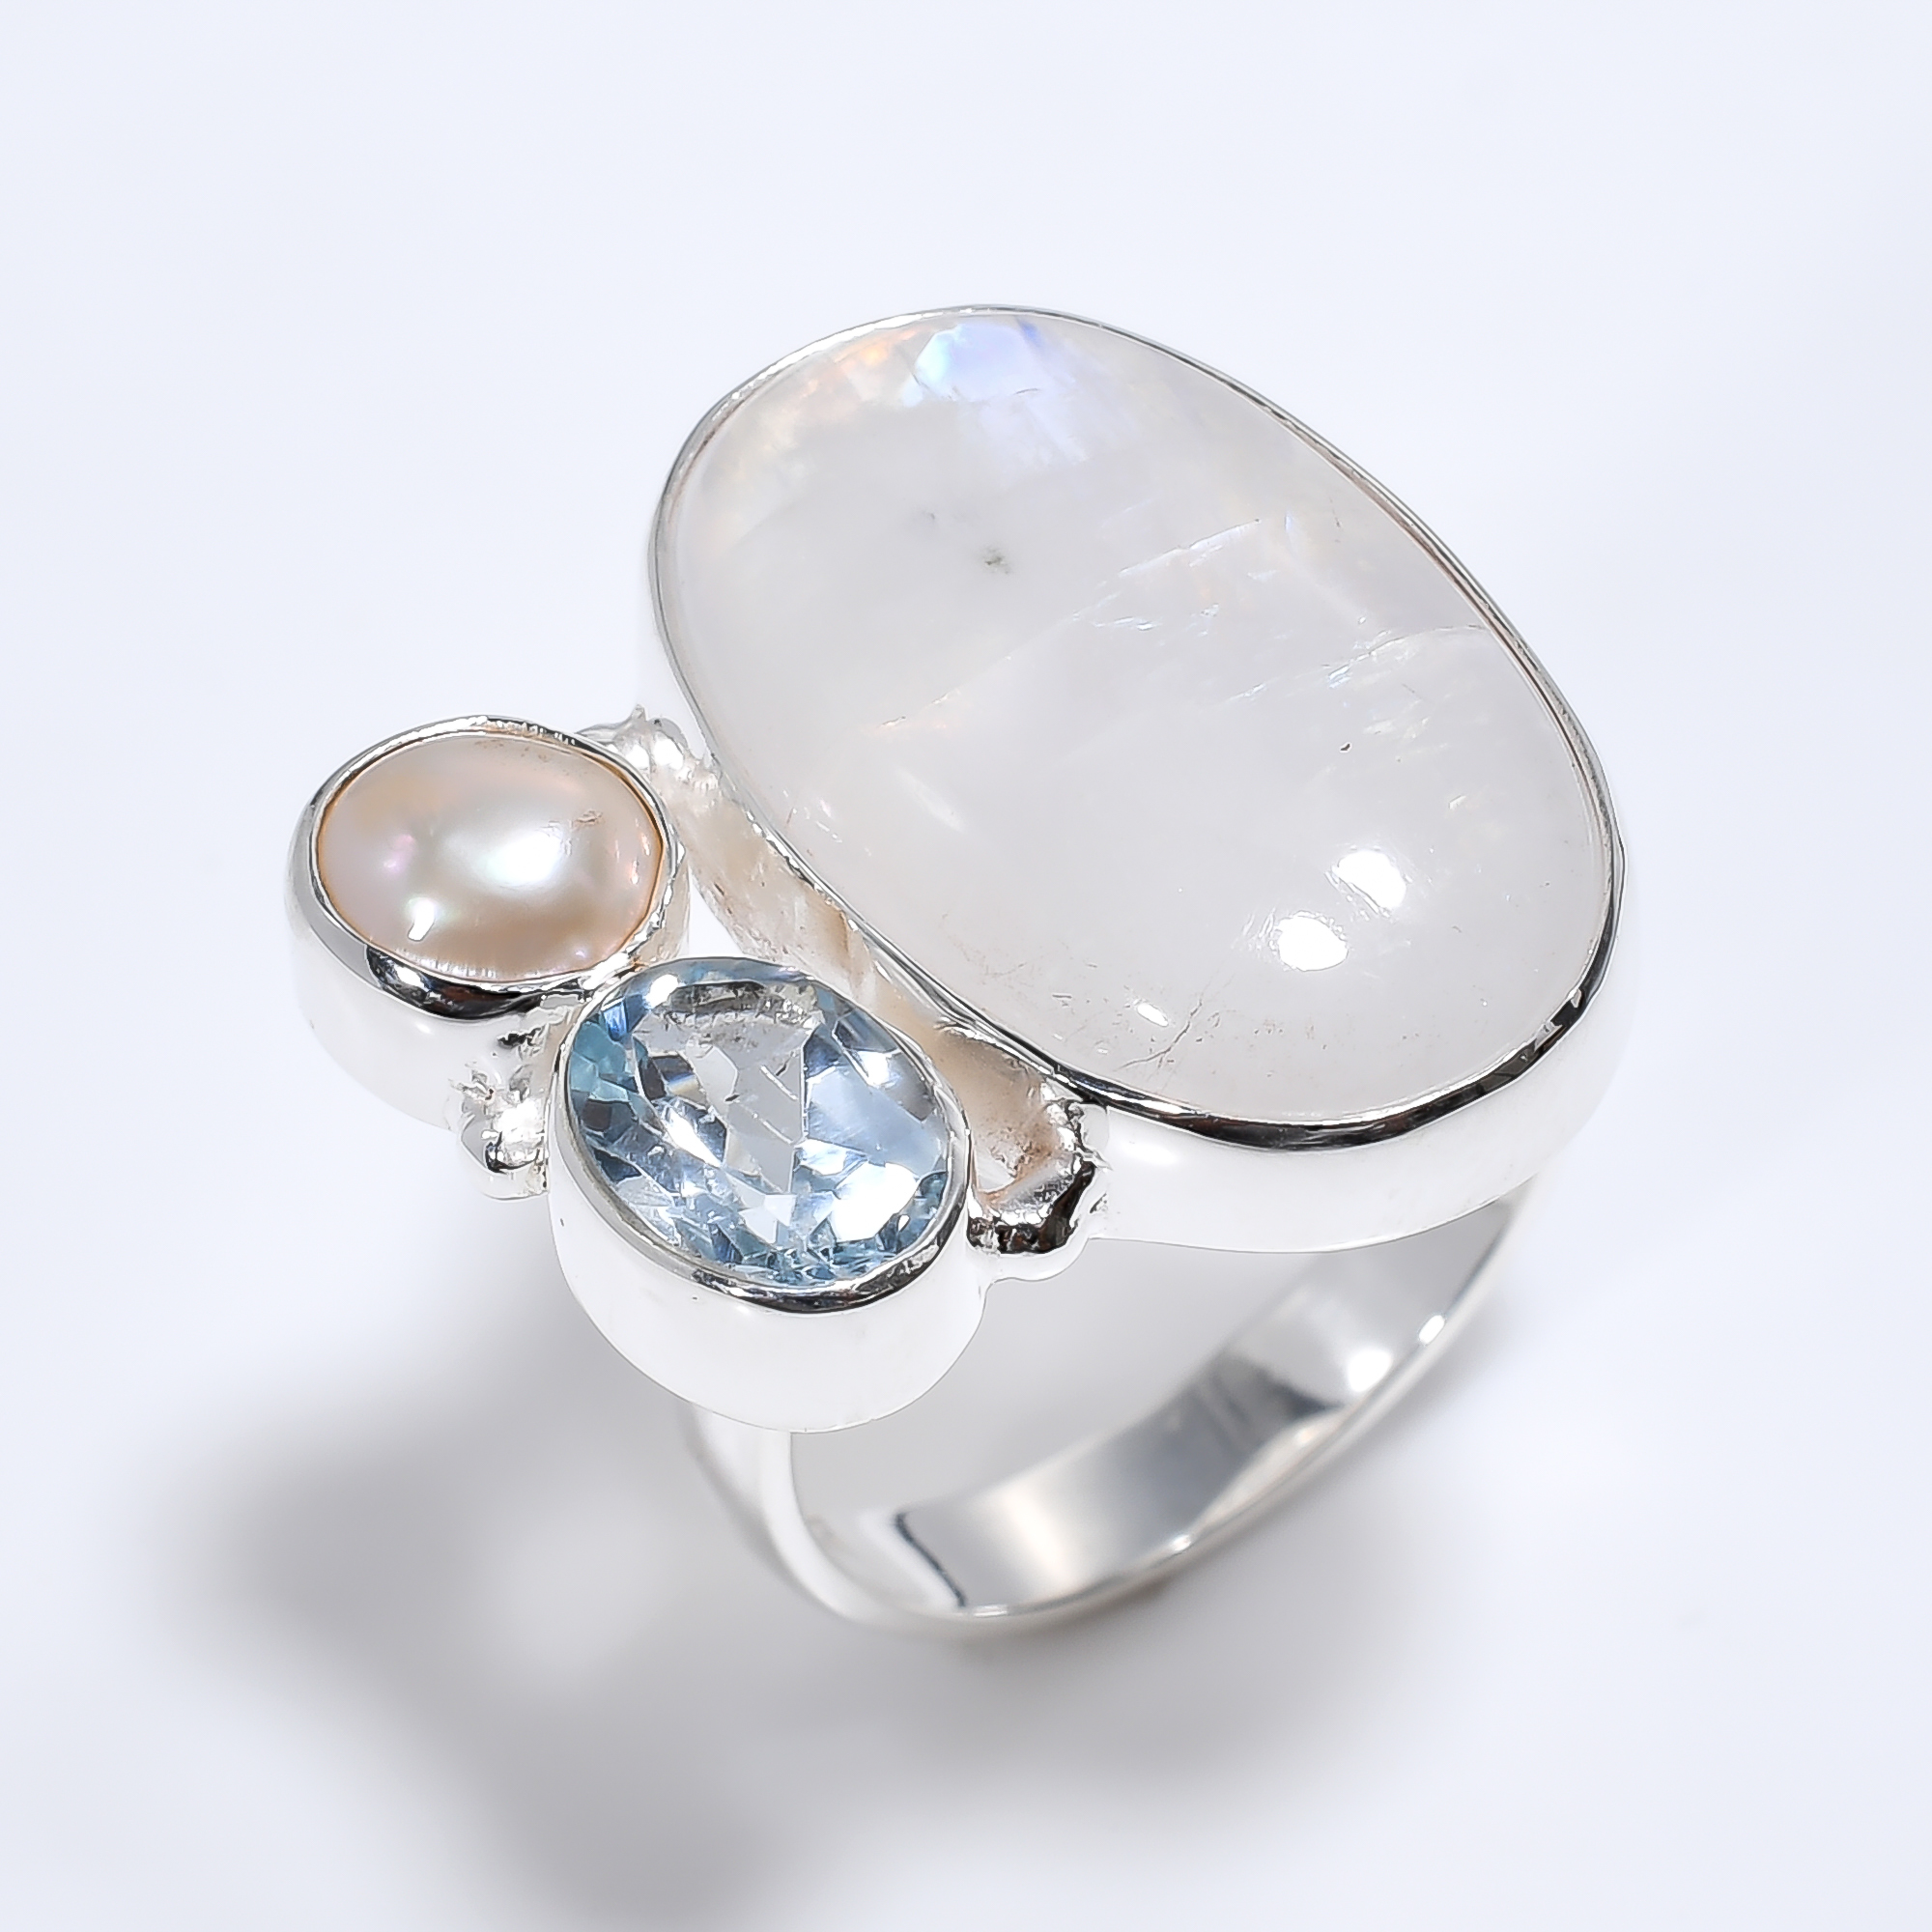 K2 Blue Topaz Gemstone 925 Sterling Silver Three Stone Ring Size US 7 Girls Fashion Rings Exporter